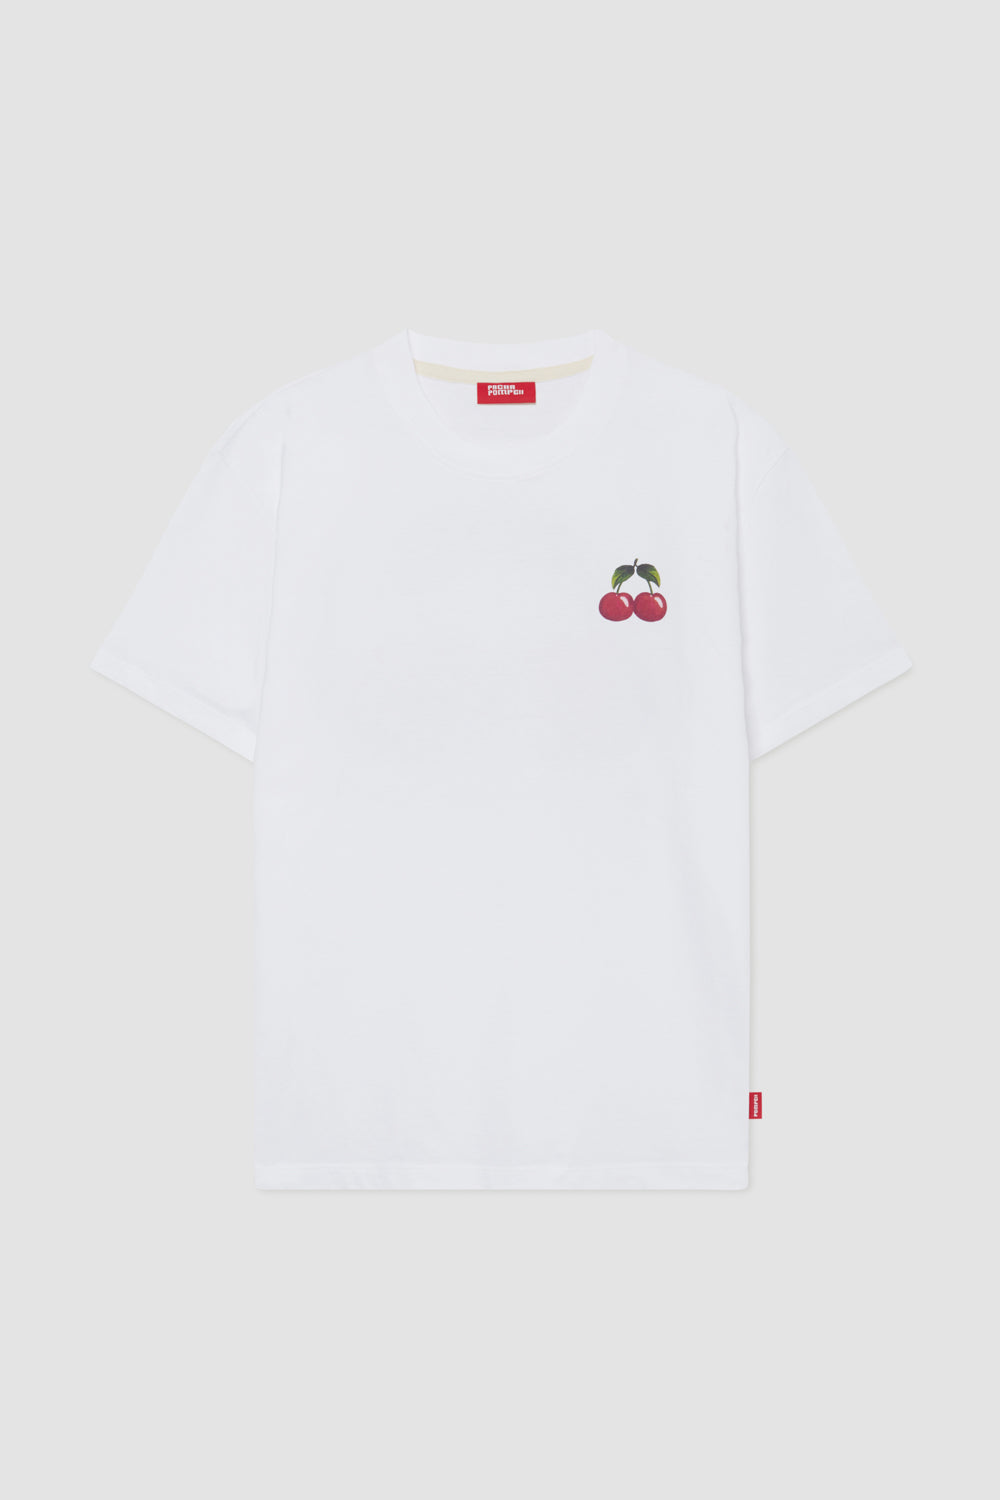 Pacha x Pompeii Camiseta Cerezas